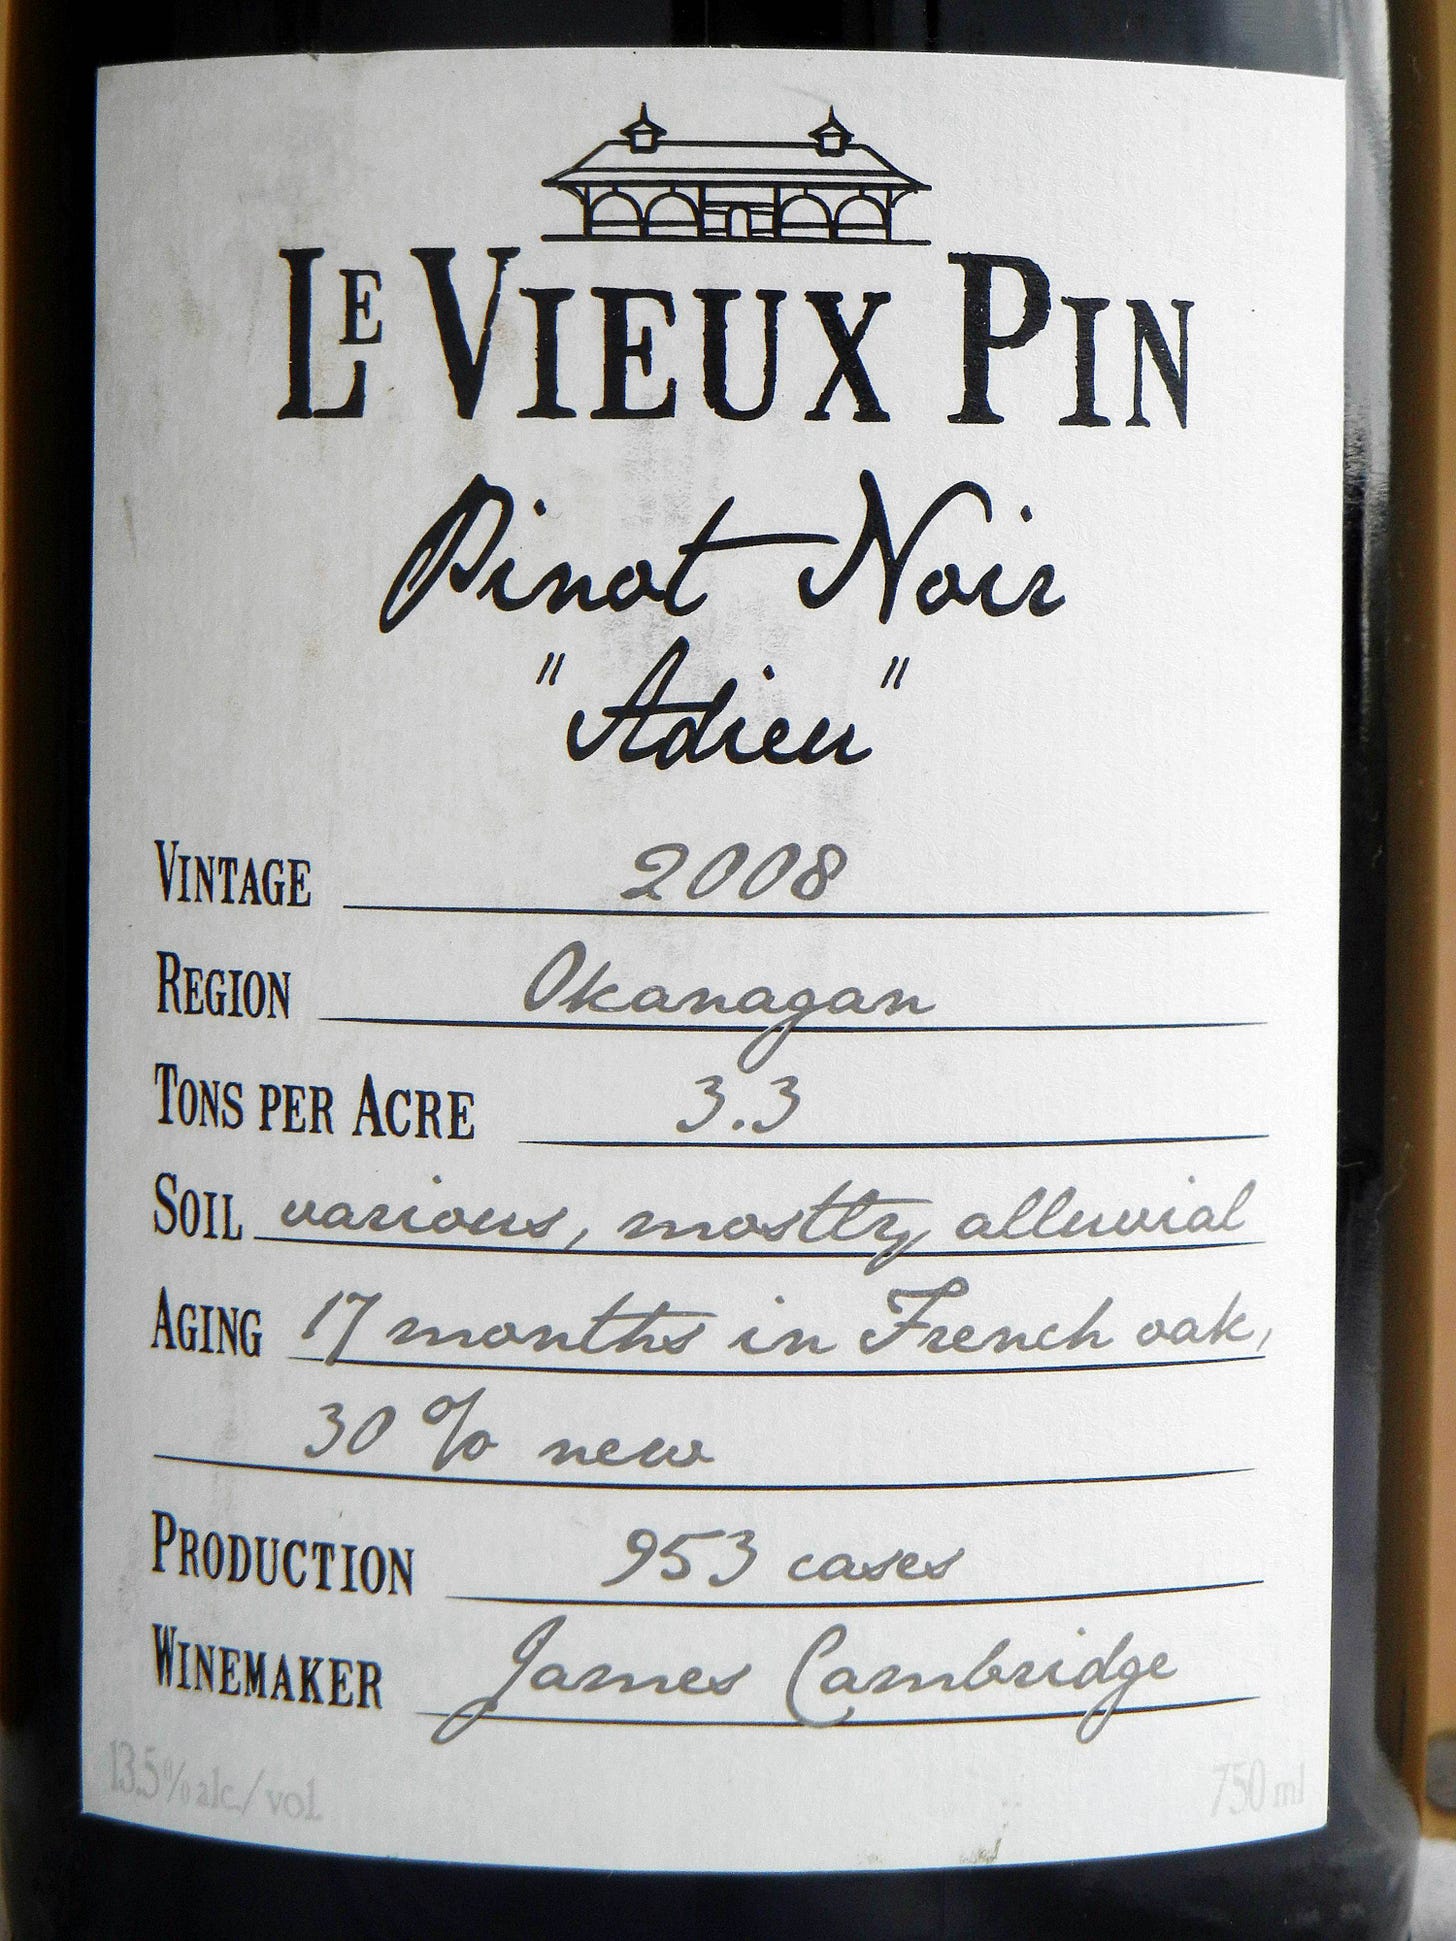 Le Vieux Pin Adieu Pinot Noir 2008 Label - BC Pinot Noir Tasting Review 16